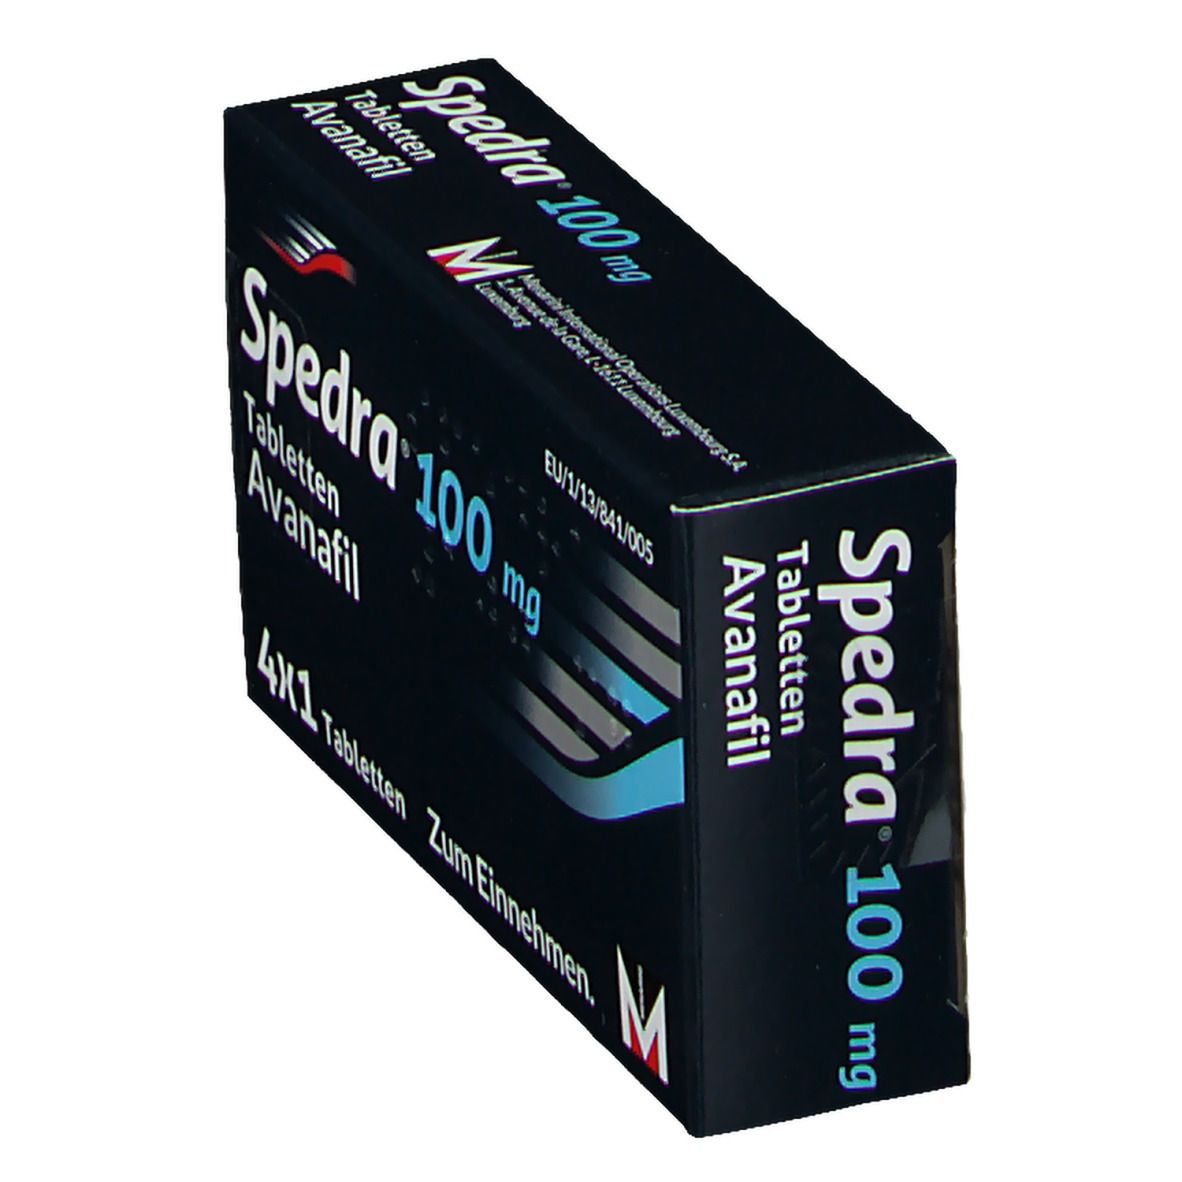 Spedra® 100 mg